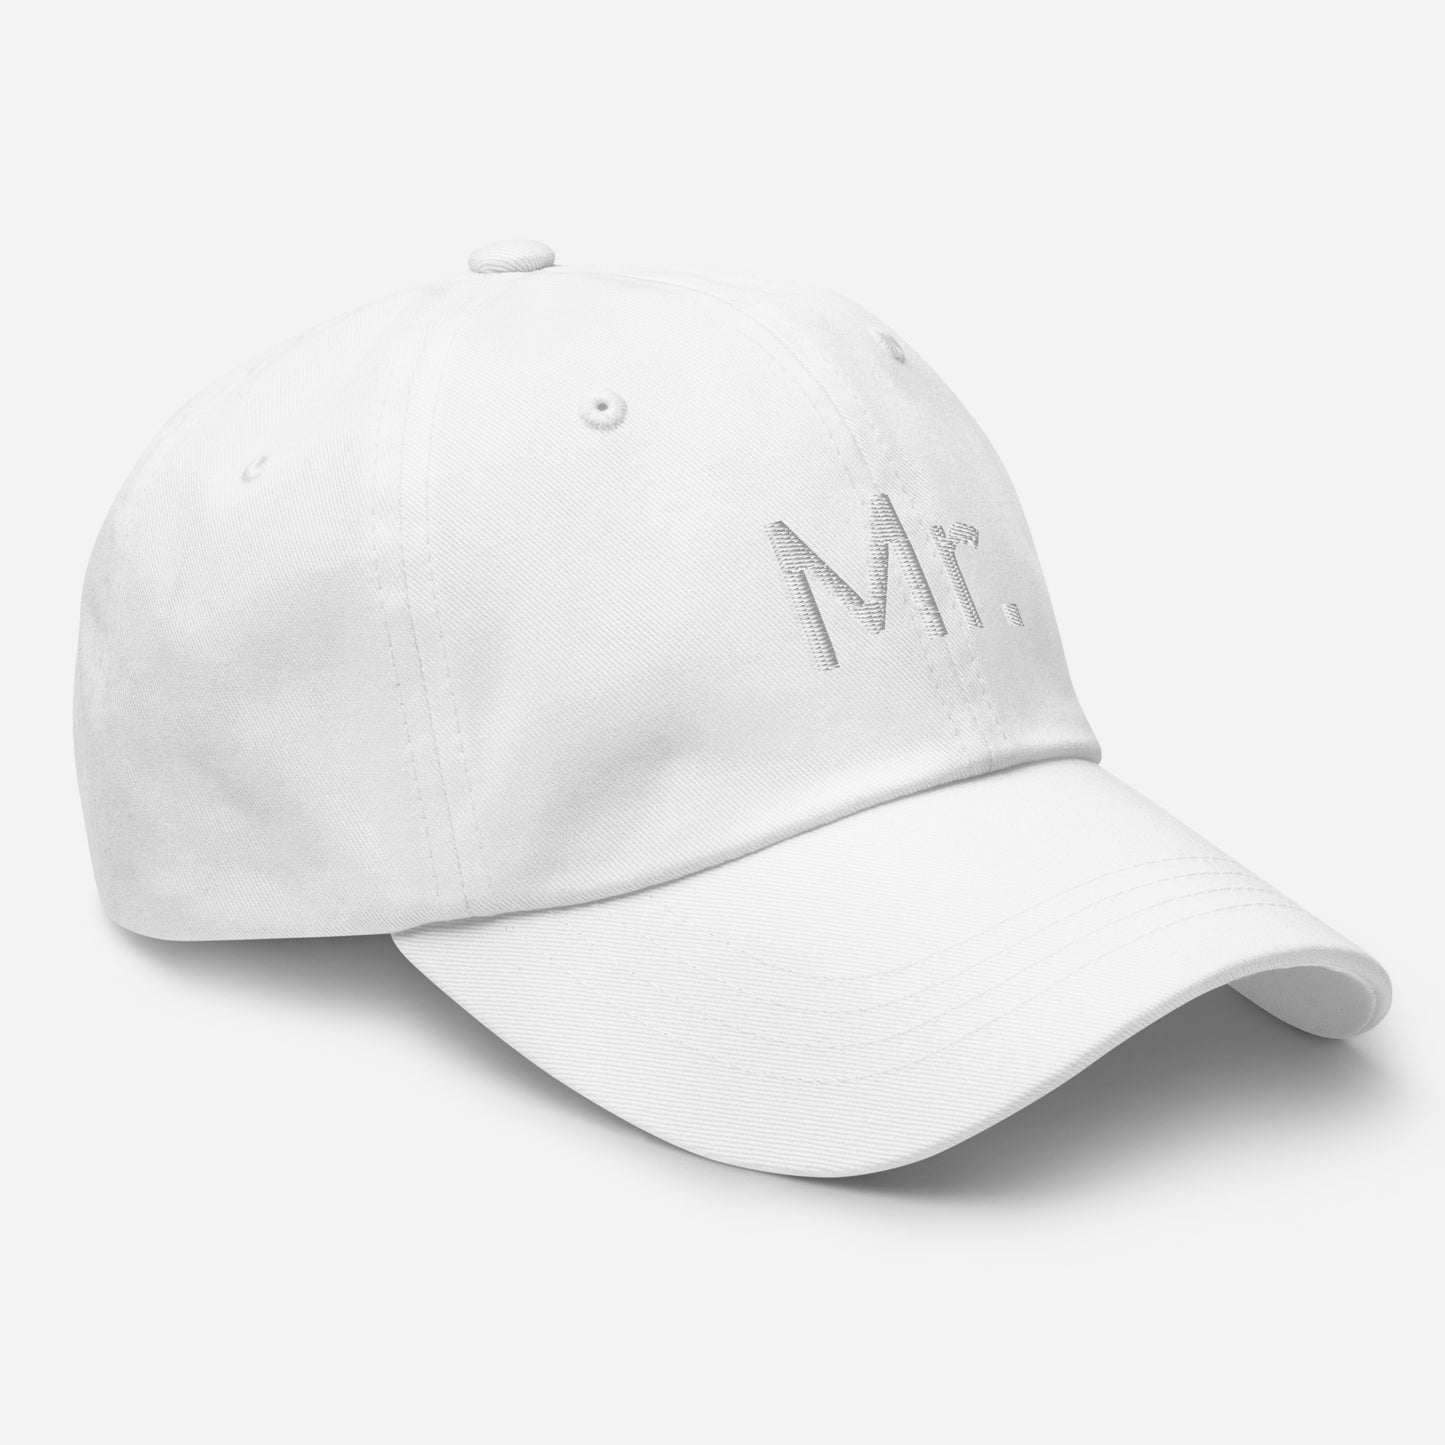 Mr. - Sustainably Made Baseball Cap